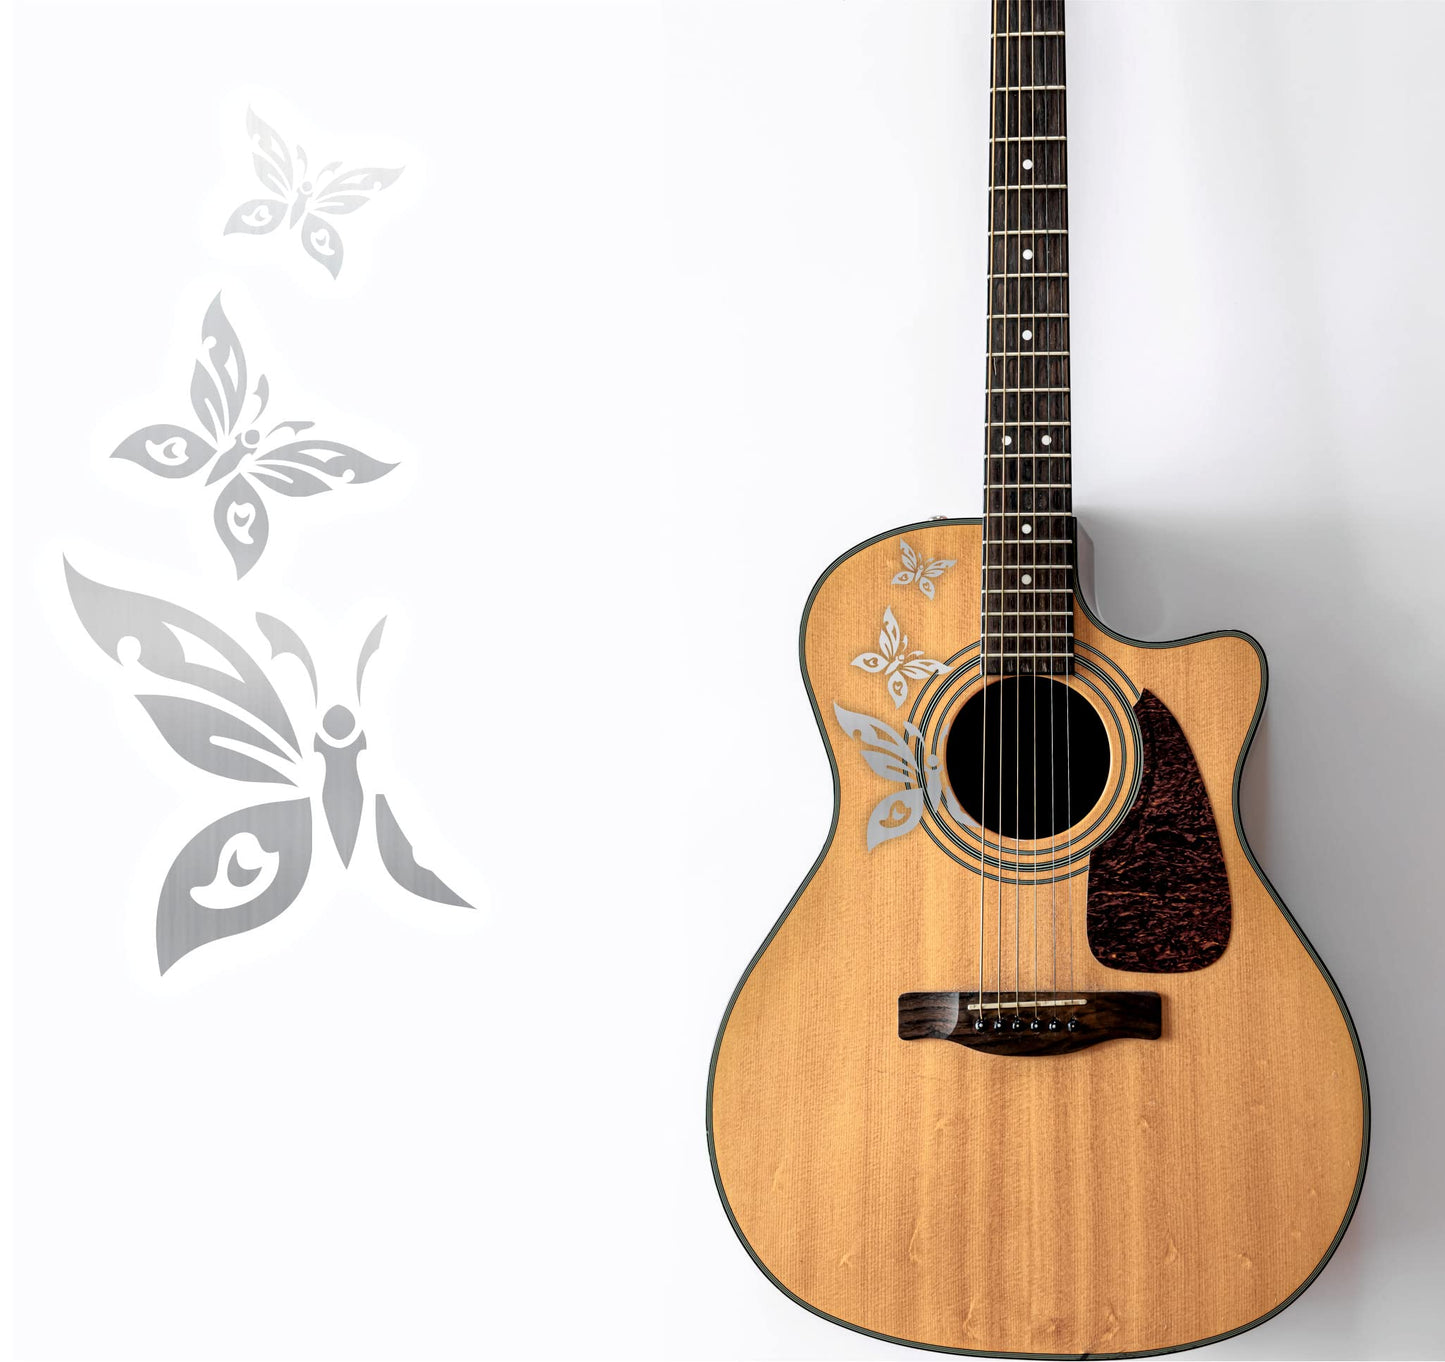 DualColorStampe Adesivi per chitarra classica acustica motivo farfalle (kit da 3 pezzi) decalcomania per chitarra - X0005 a €13.99 solo da DualColorStampe